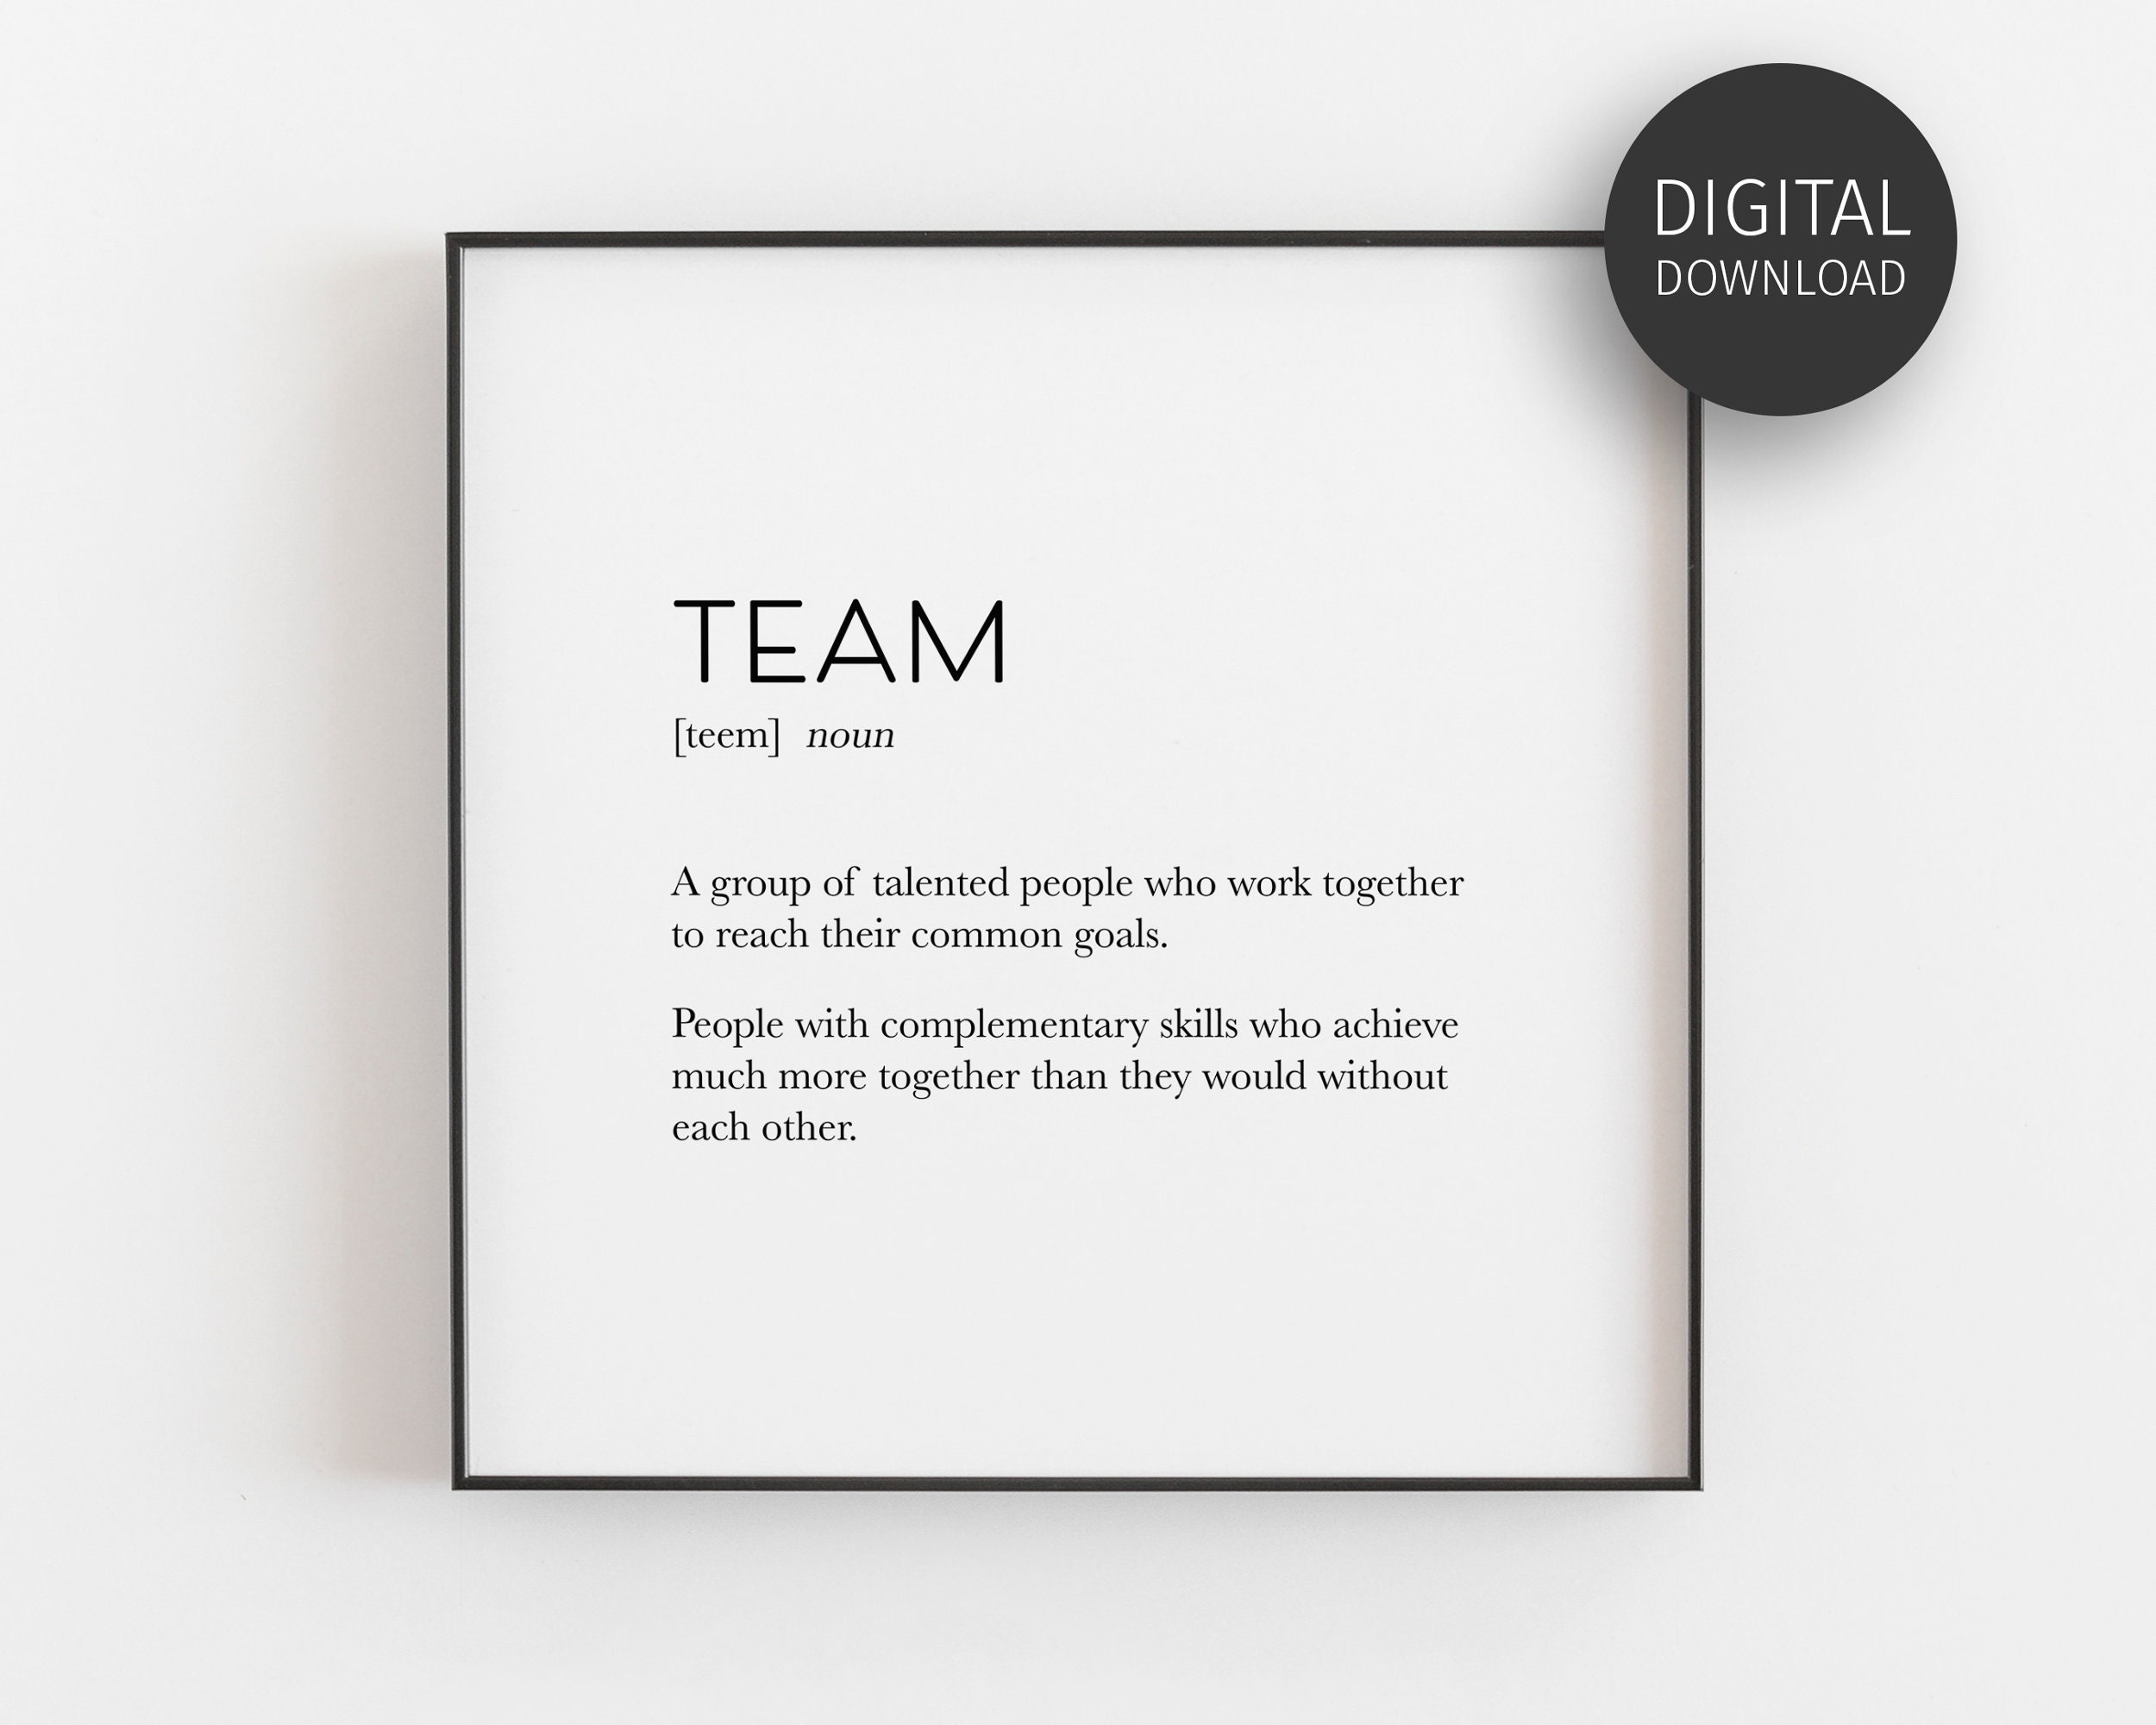 team presentation definition